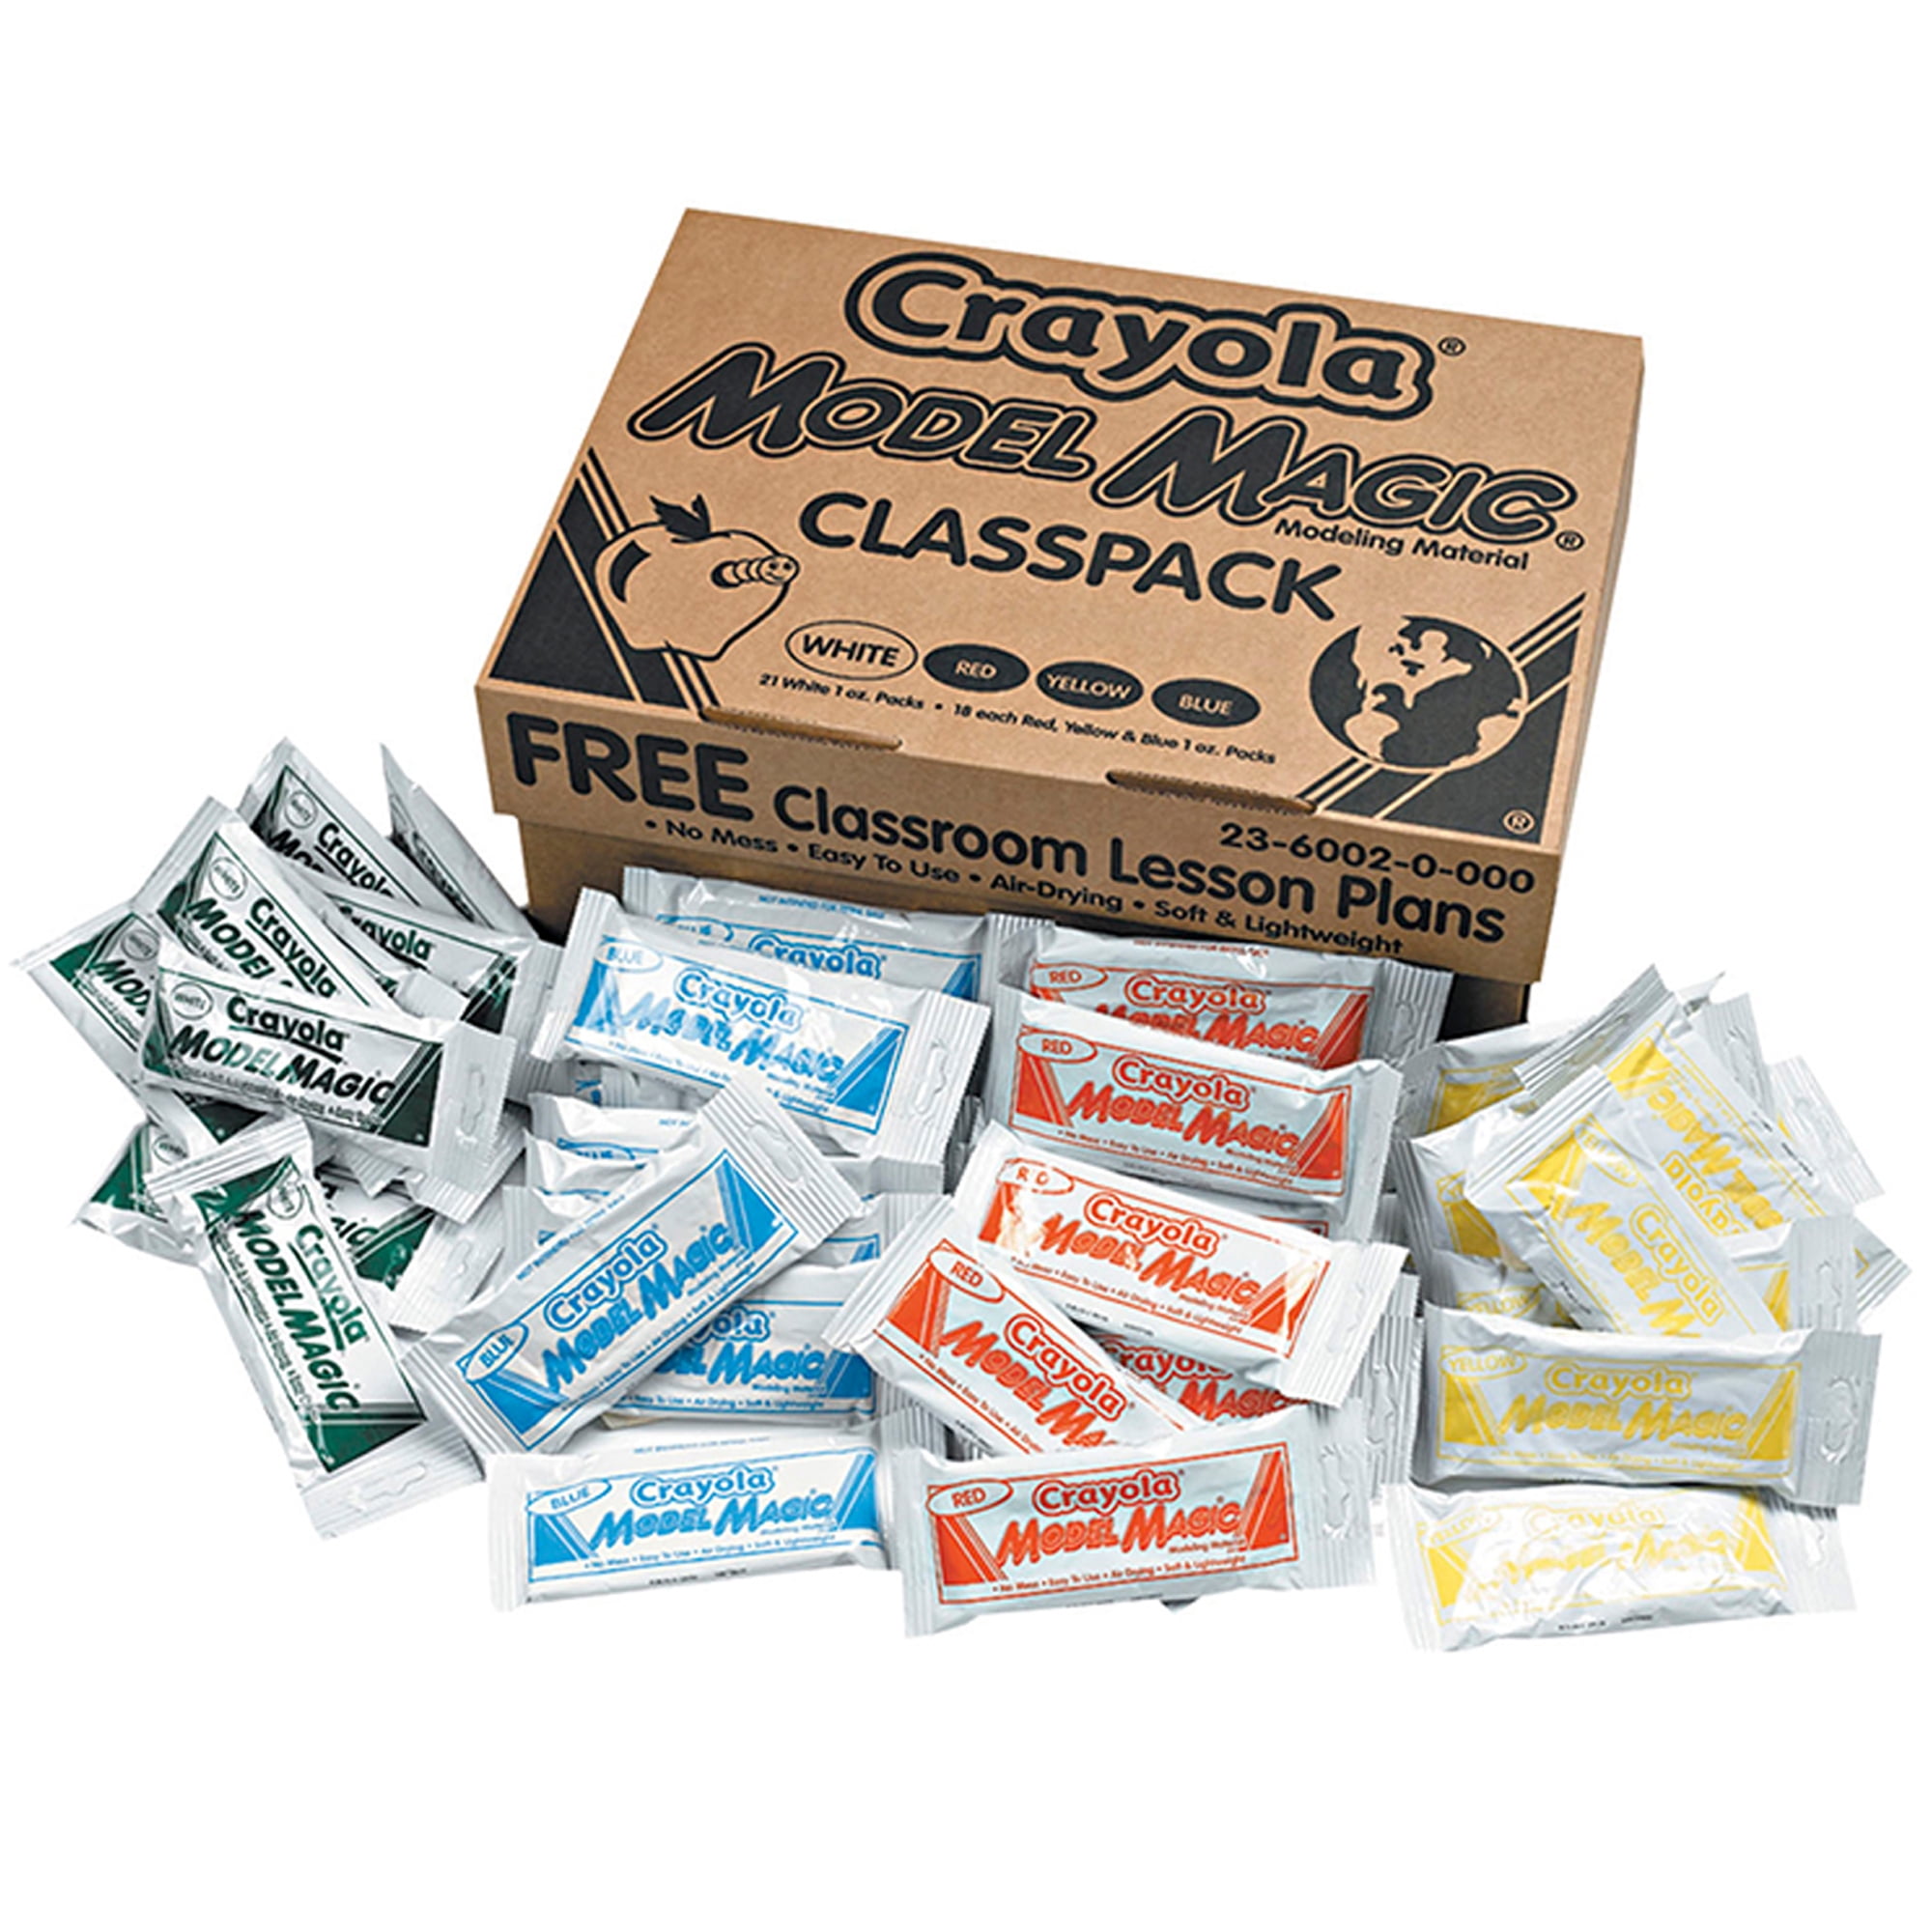  Crayola 574418 Model Magic Compound, White, Twelve 8